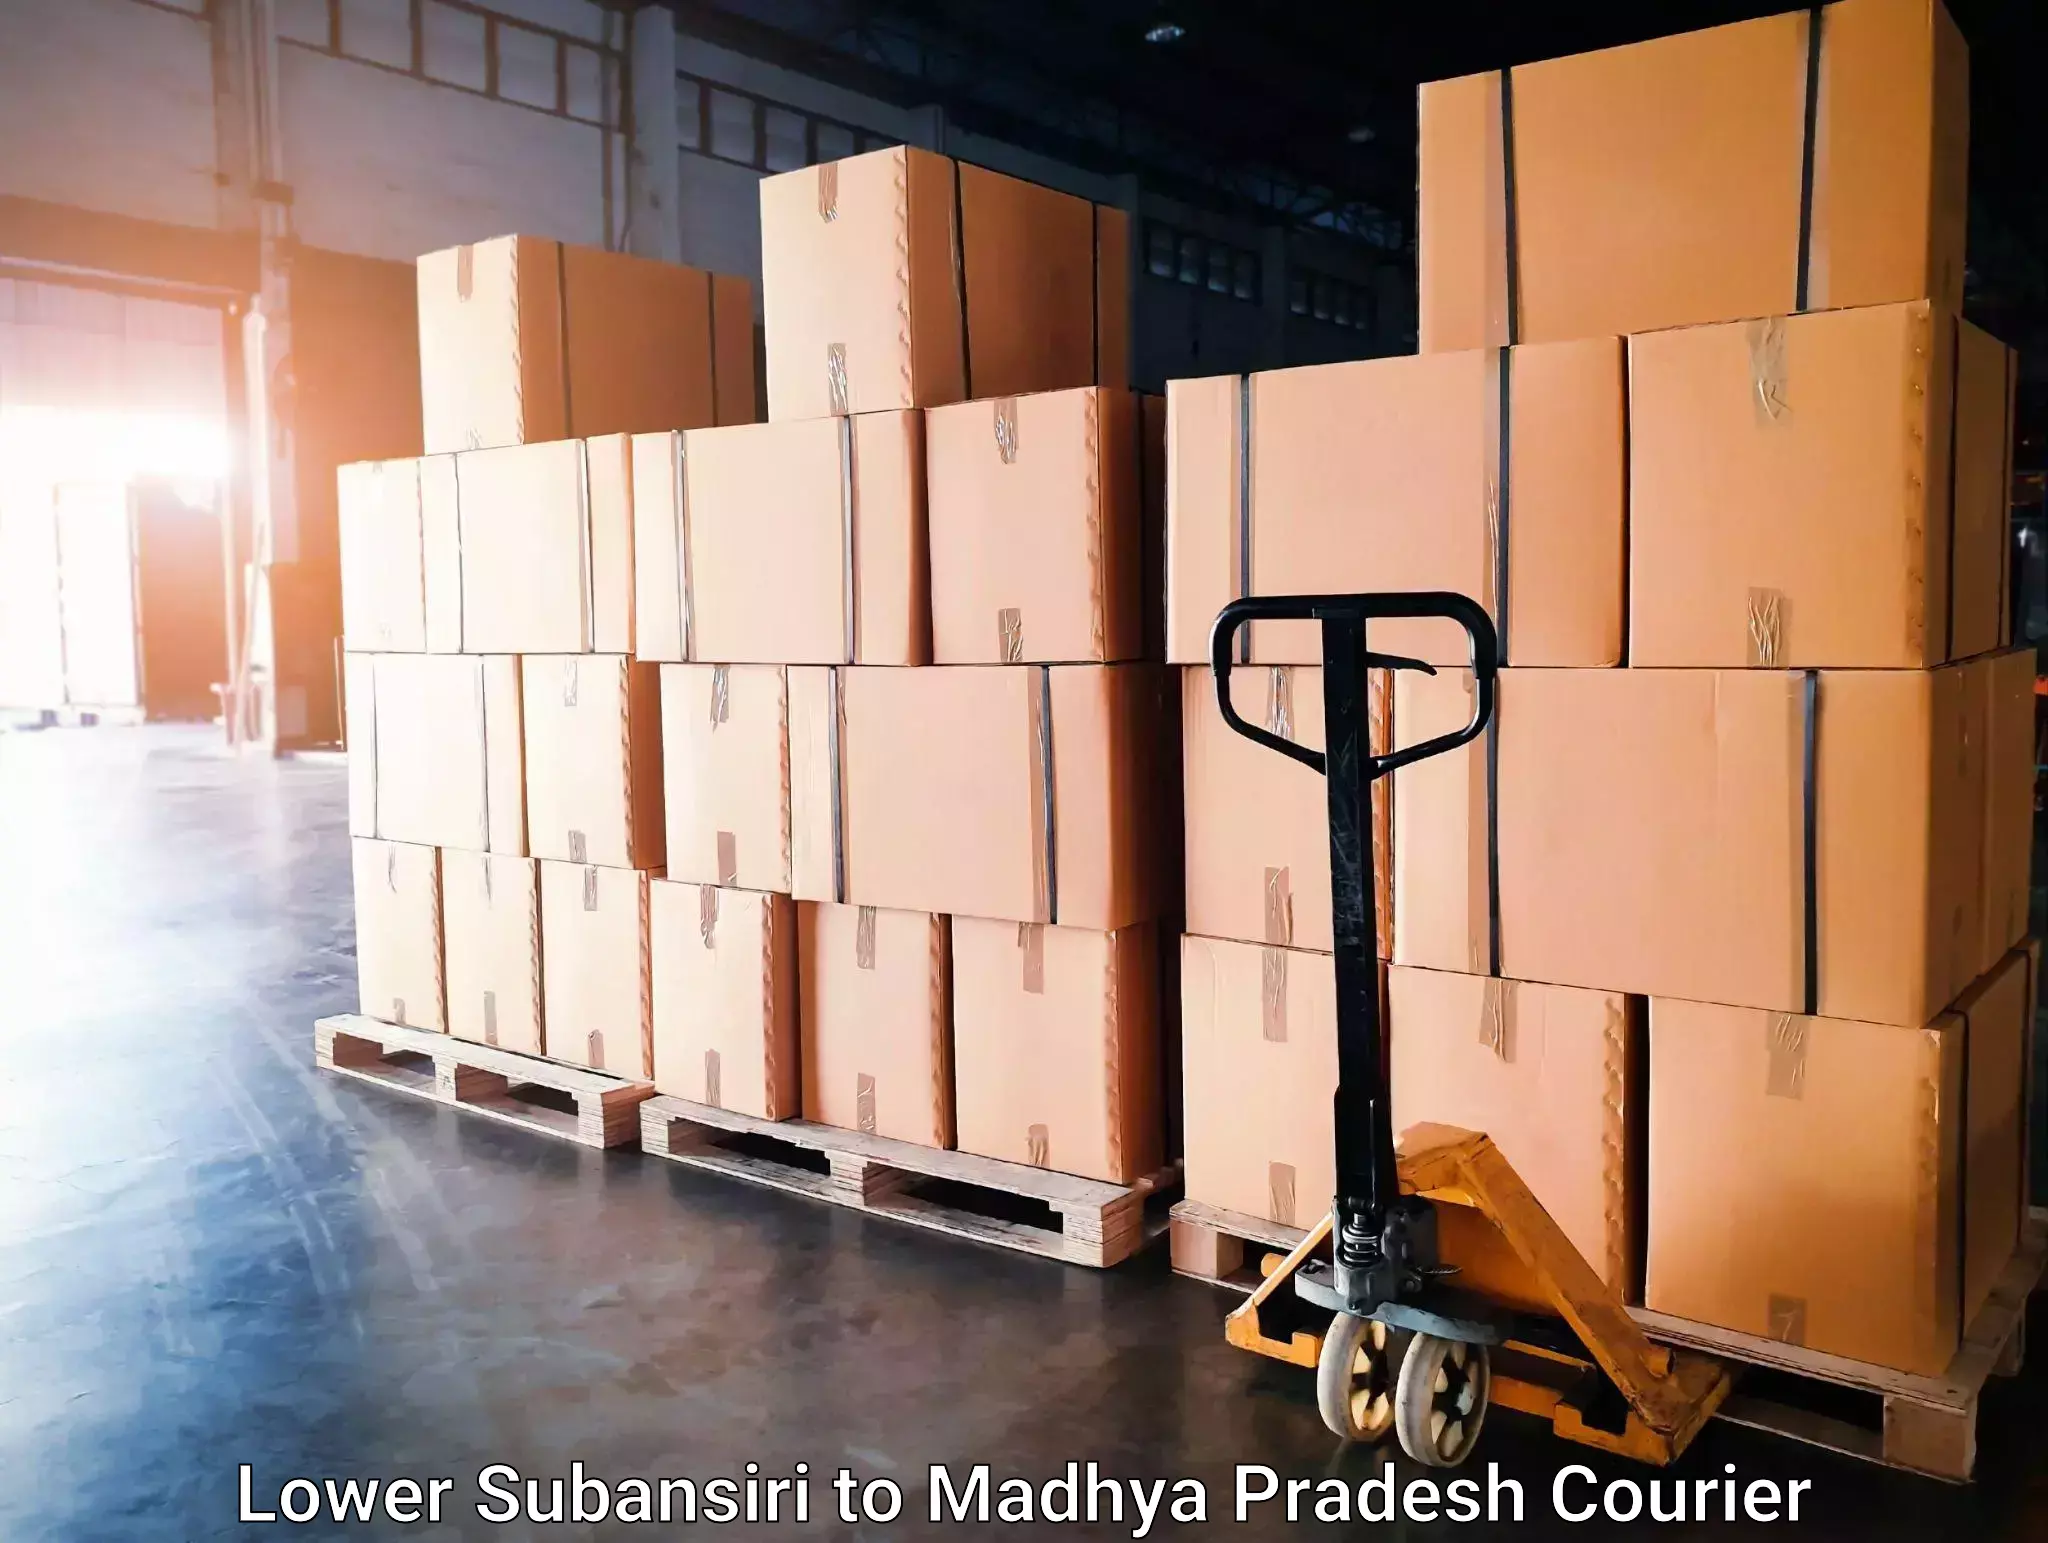 Courier service innovation in Lower Subansiri to Raipur Karchuliyan